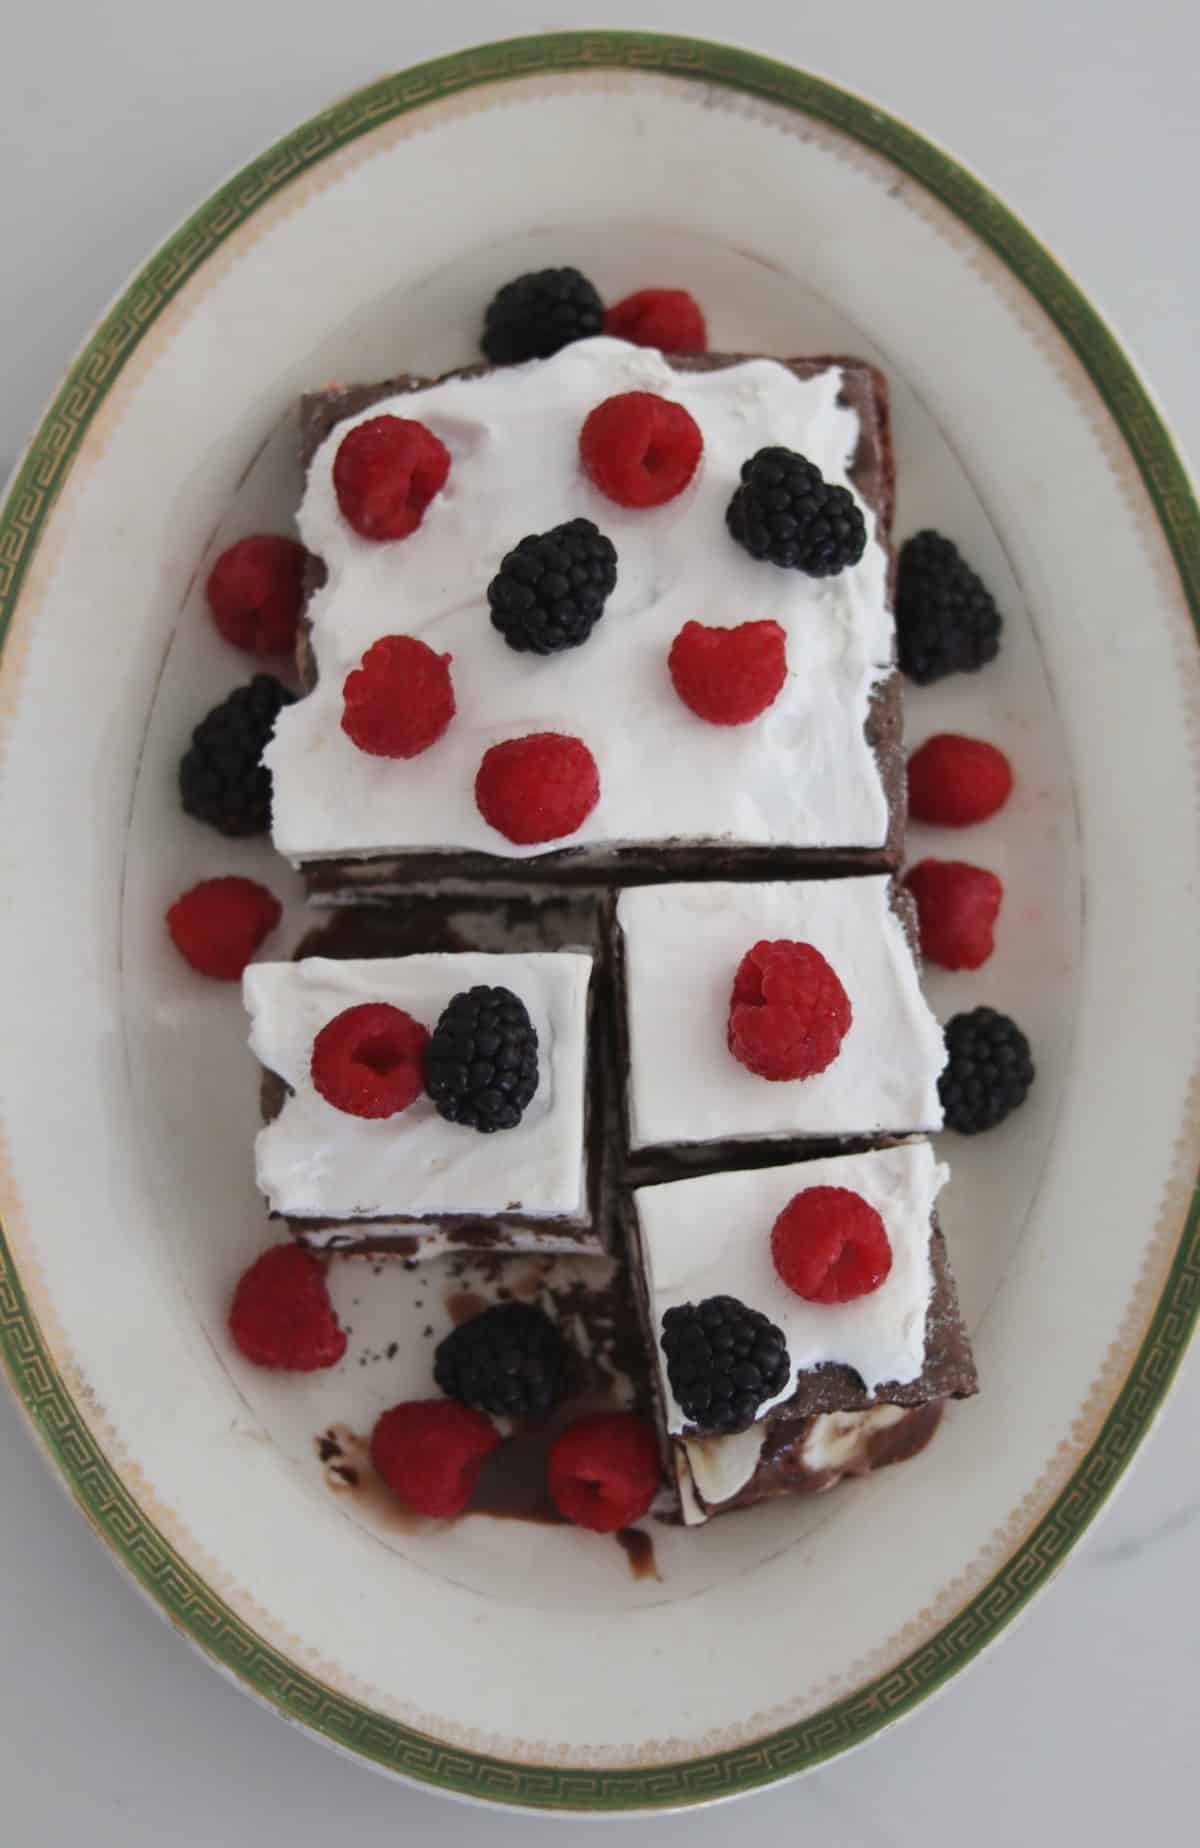 Chocolate fudge ice cream bar dessert topped with raspberries and blackberries on platter